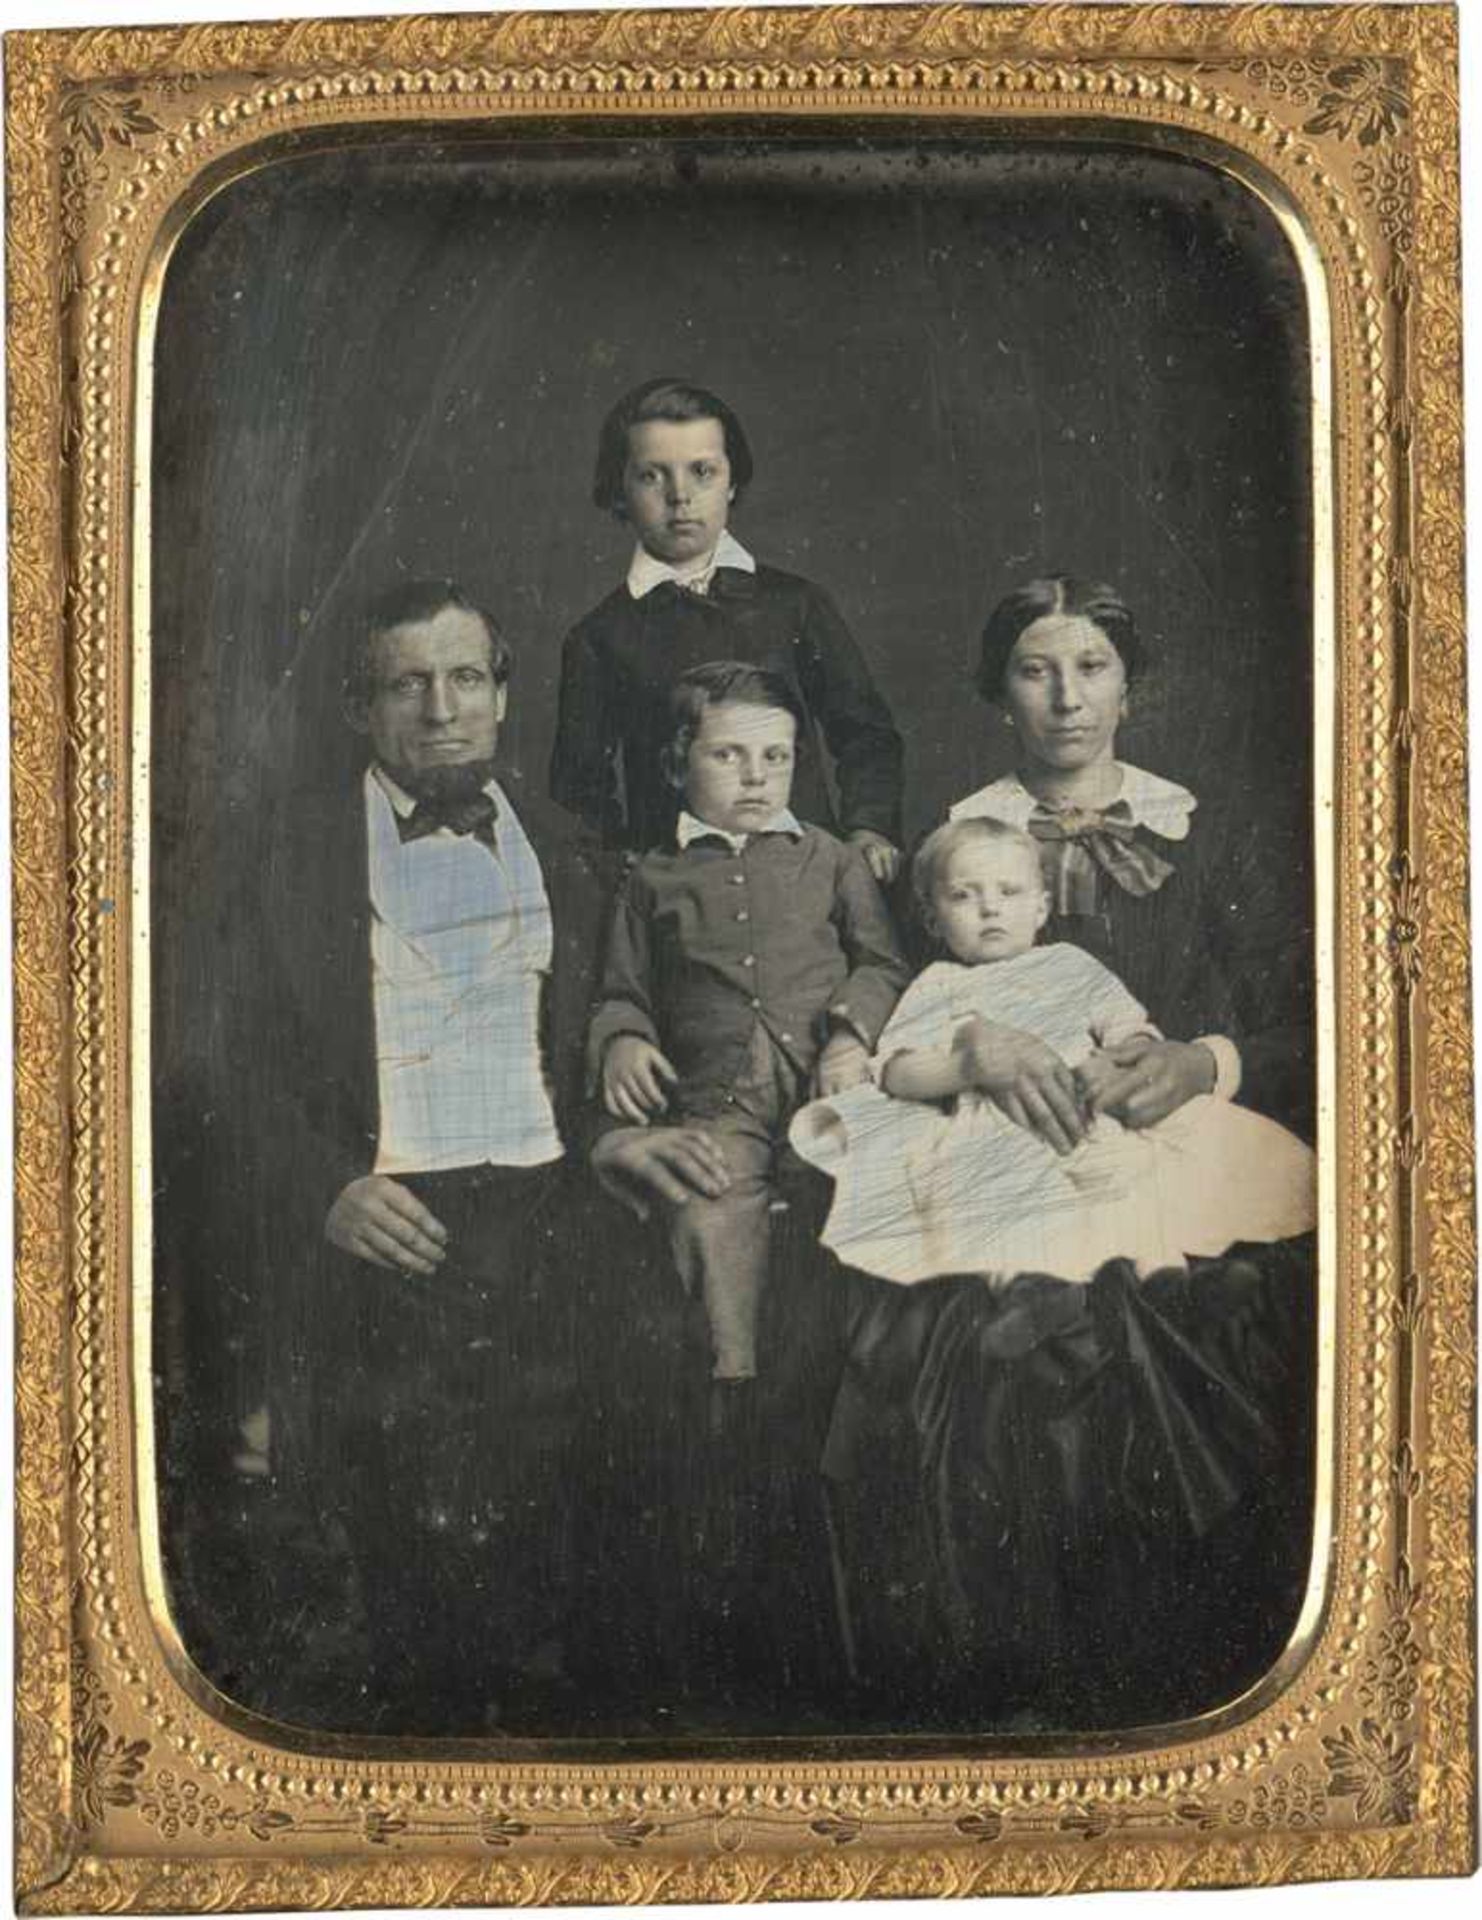 Daguerreotypes & Ambrotypes: Portraits Photographer unknown. Portraits. 1850s - 1860s. 4